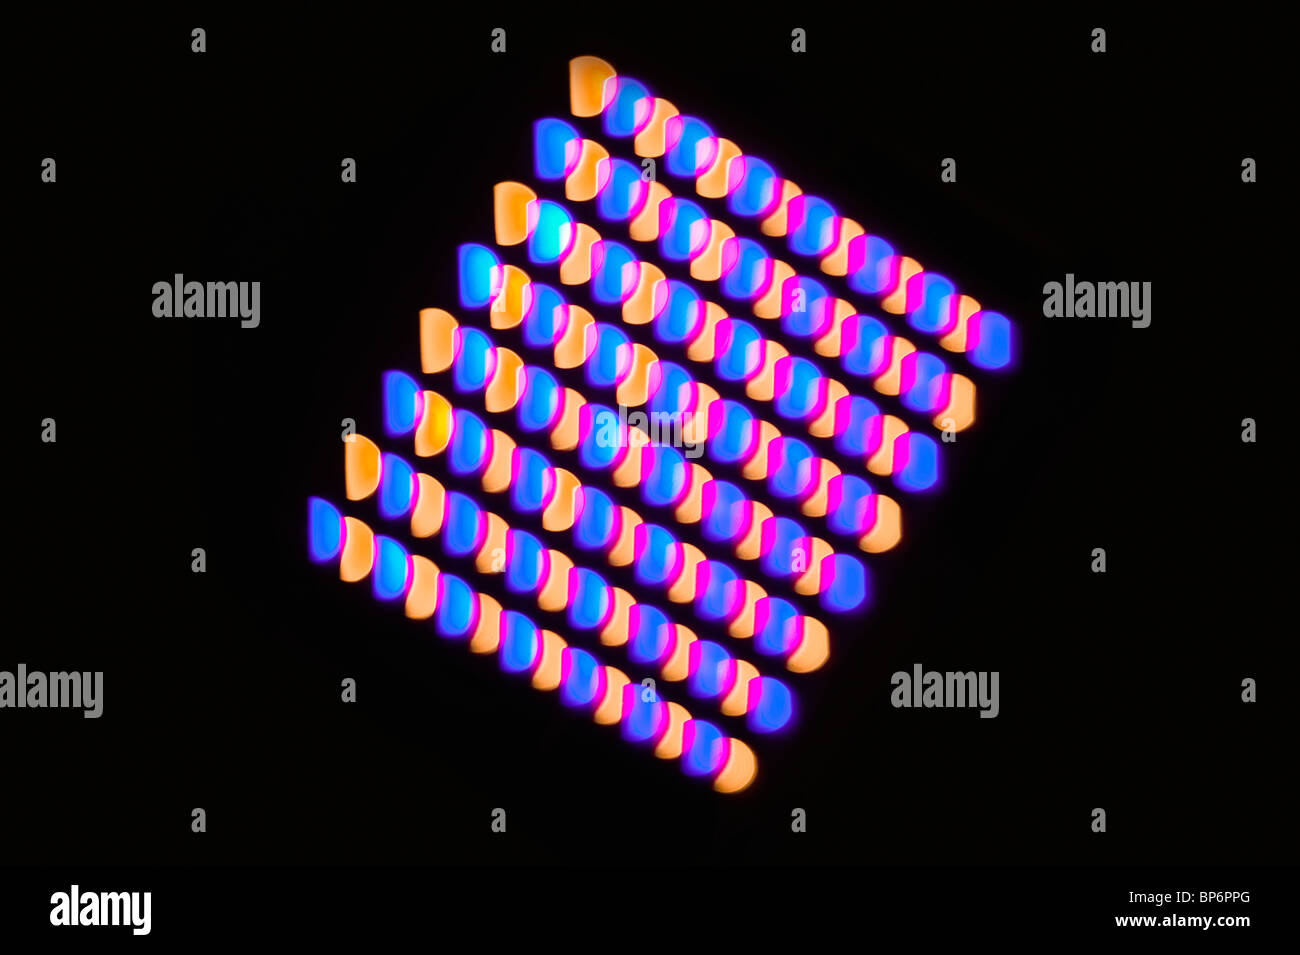 Blurred light pattern Stock Photo